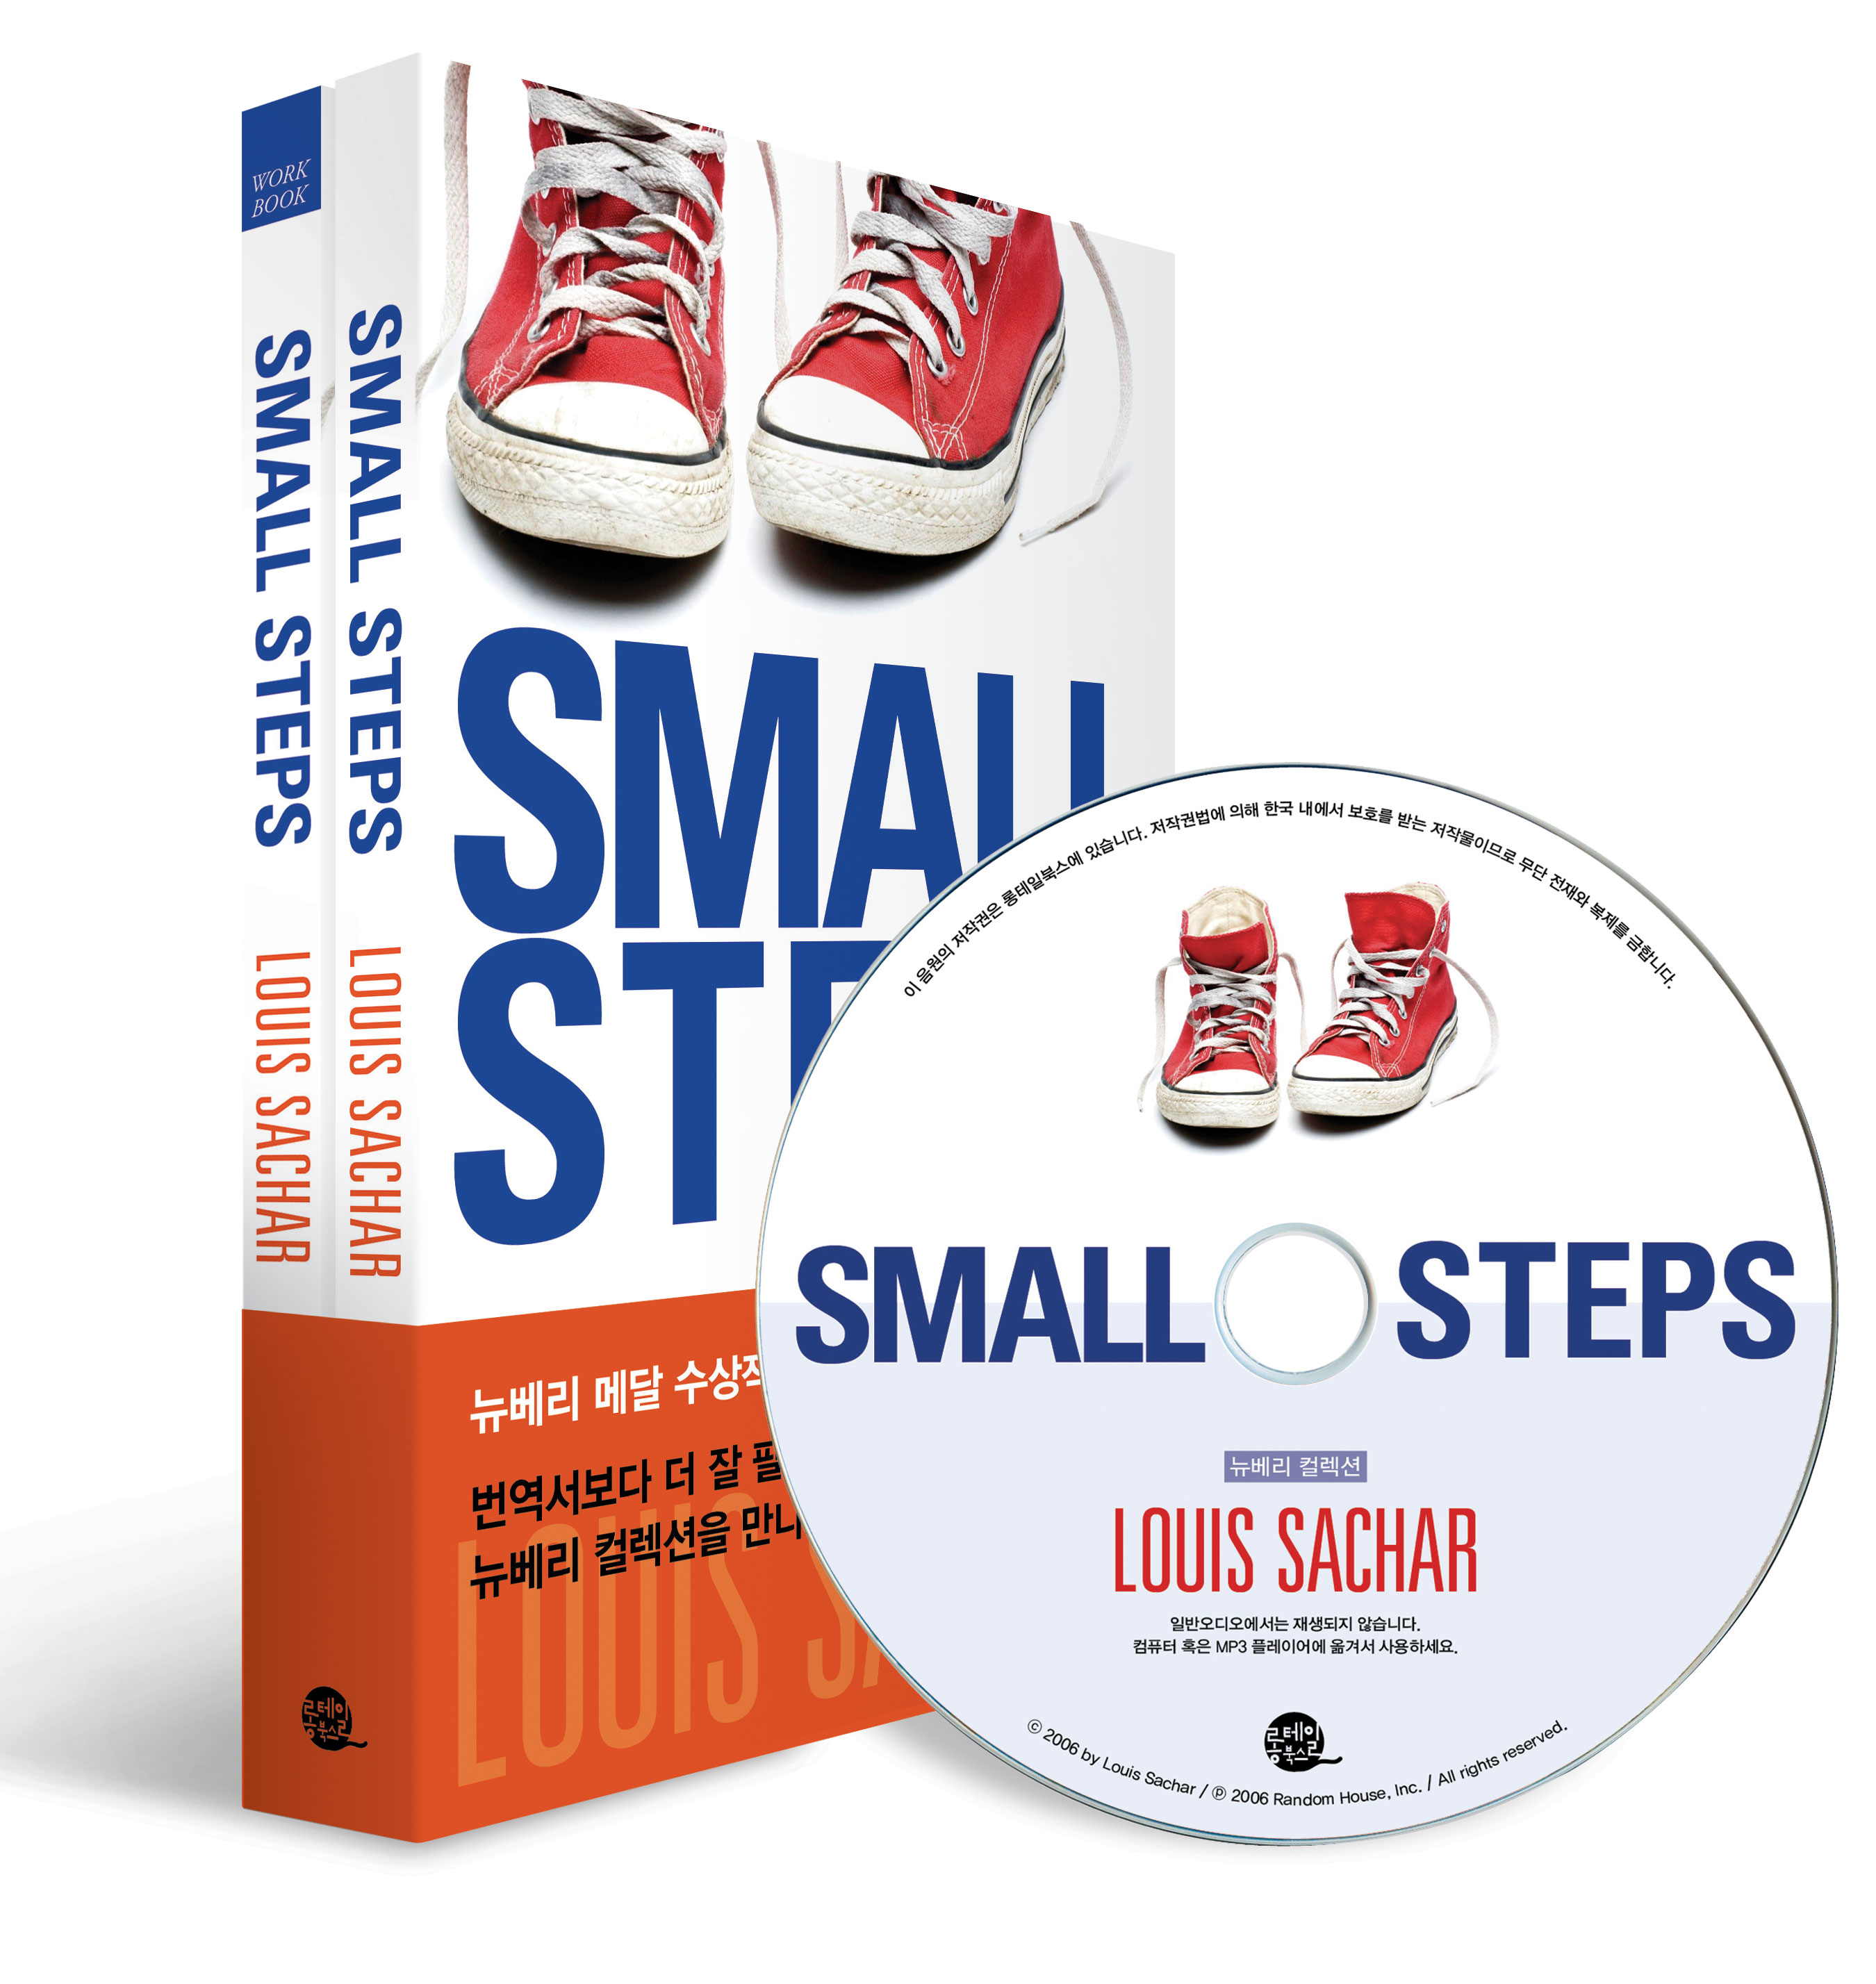 Small steps - Sachar, Louis 